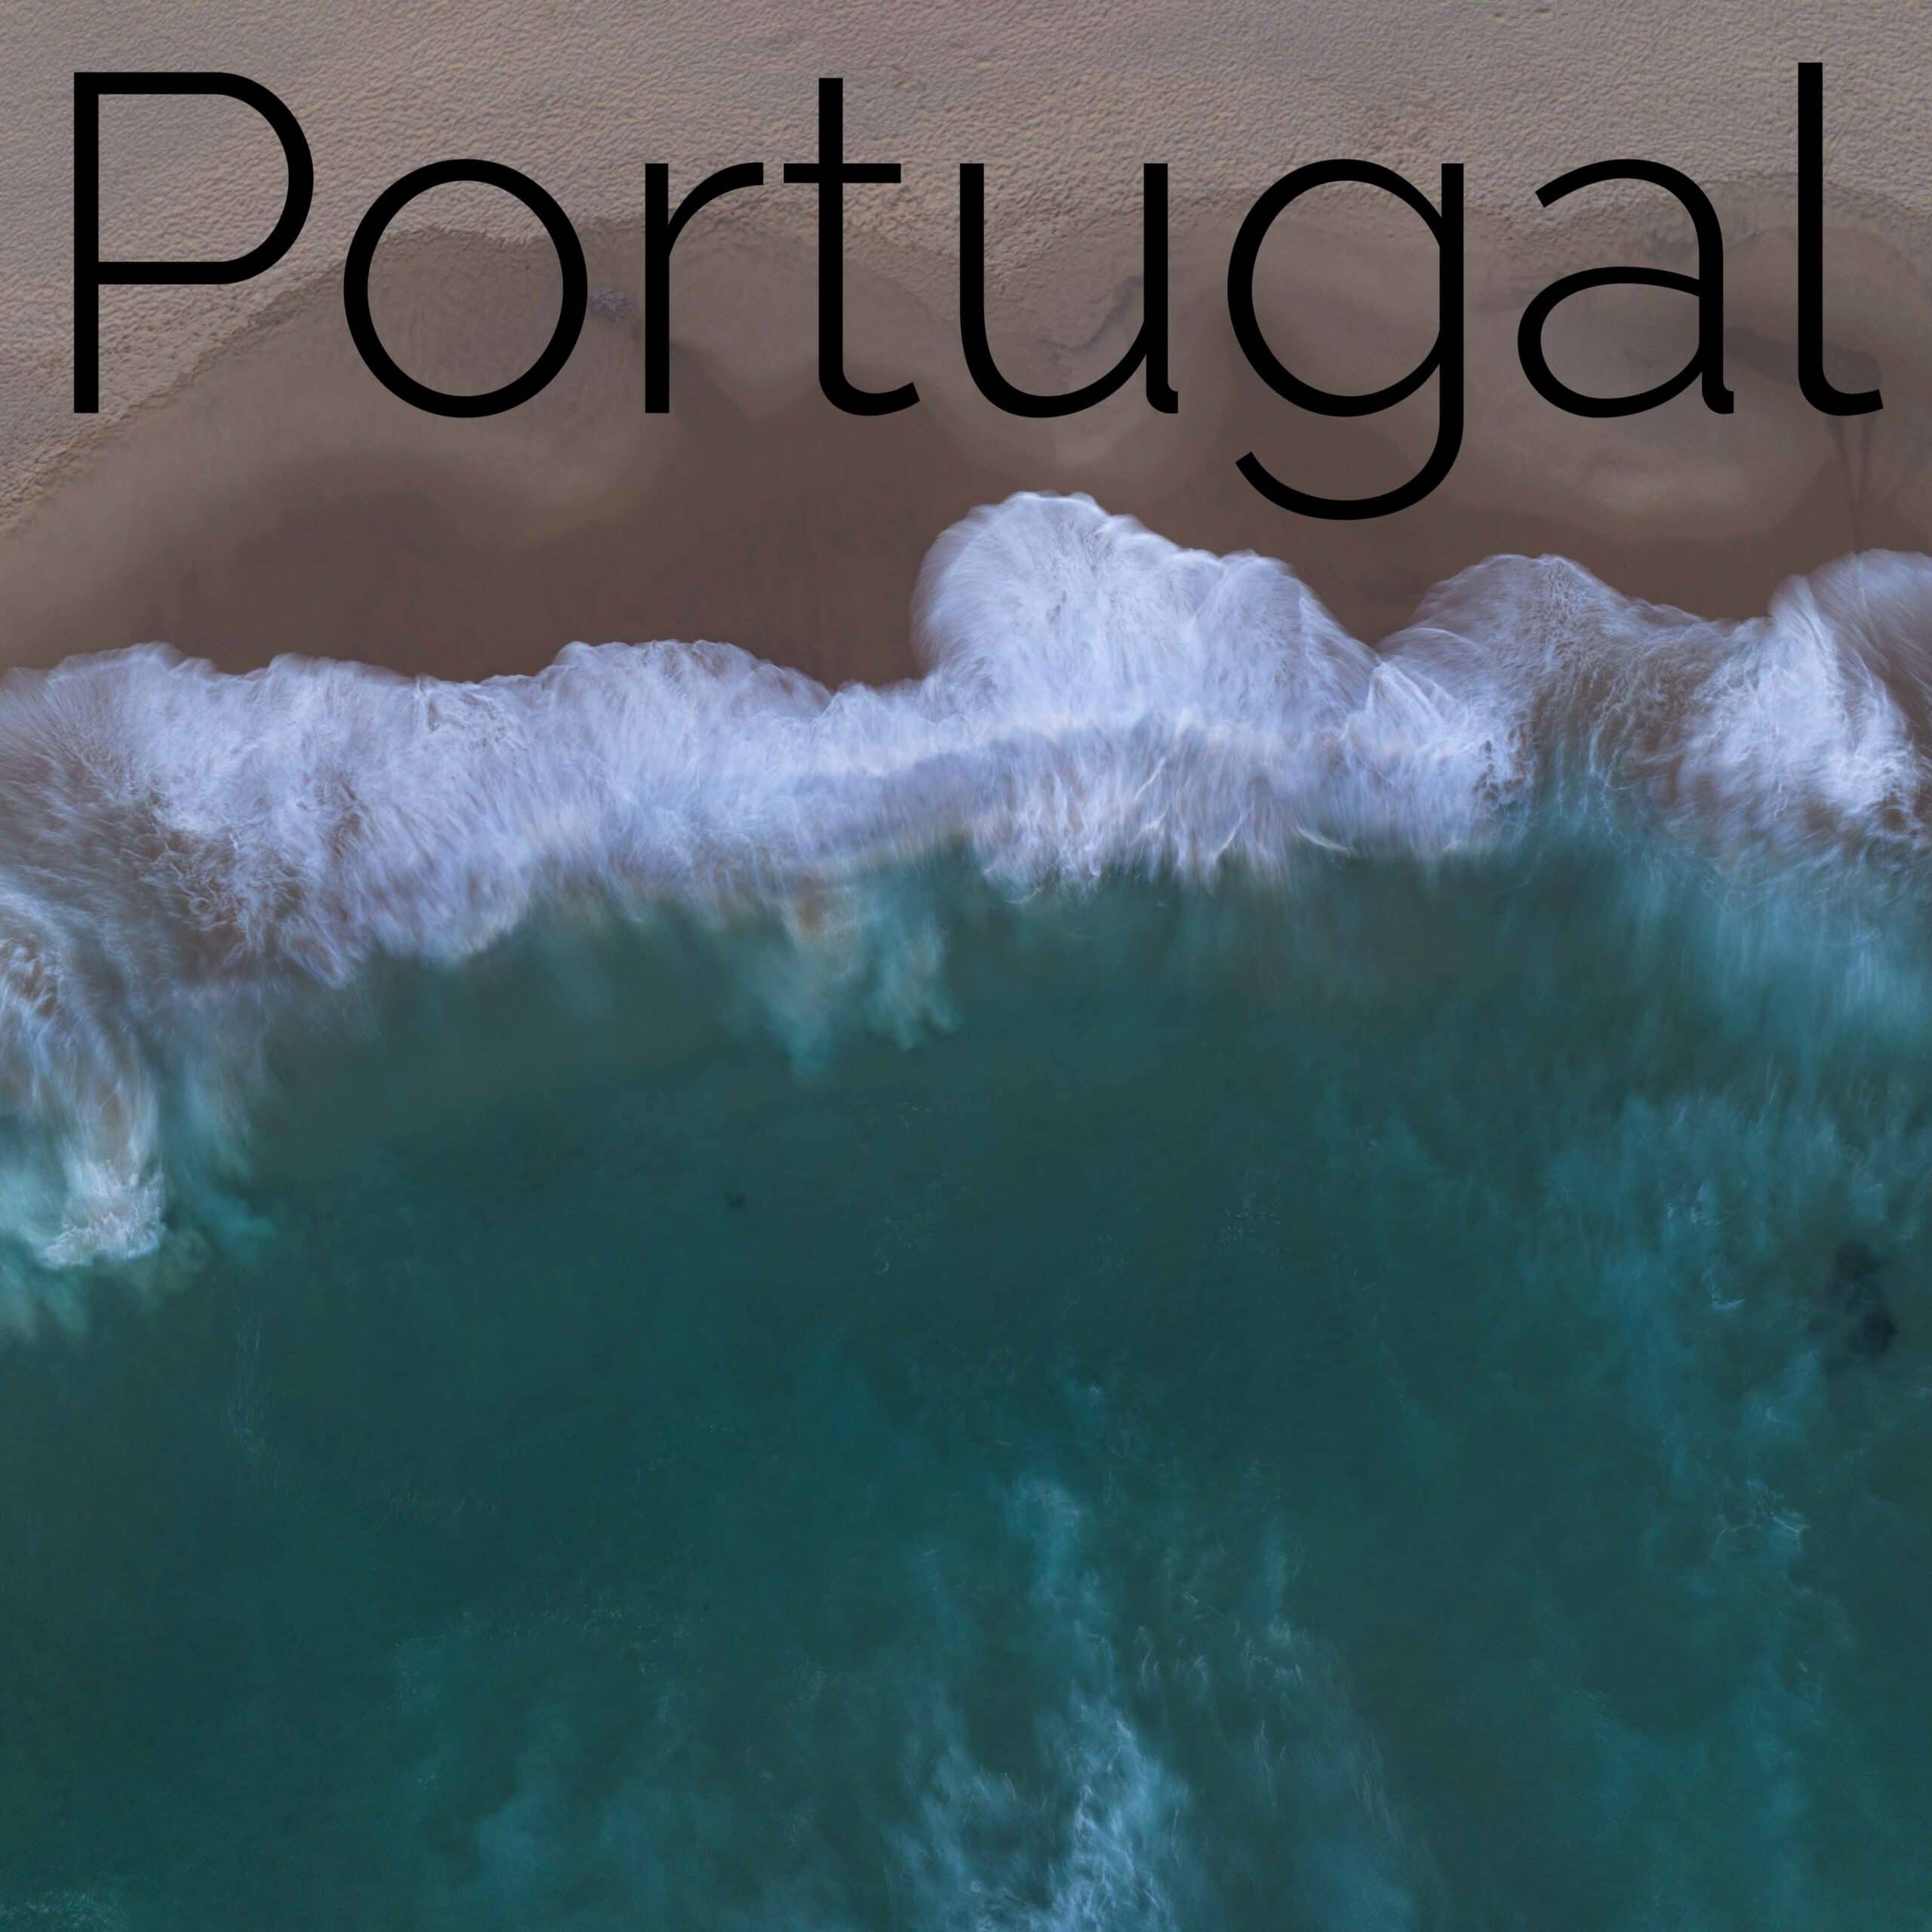 Portugal 4k Film